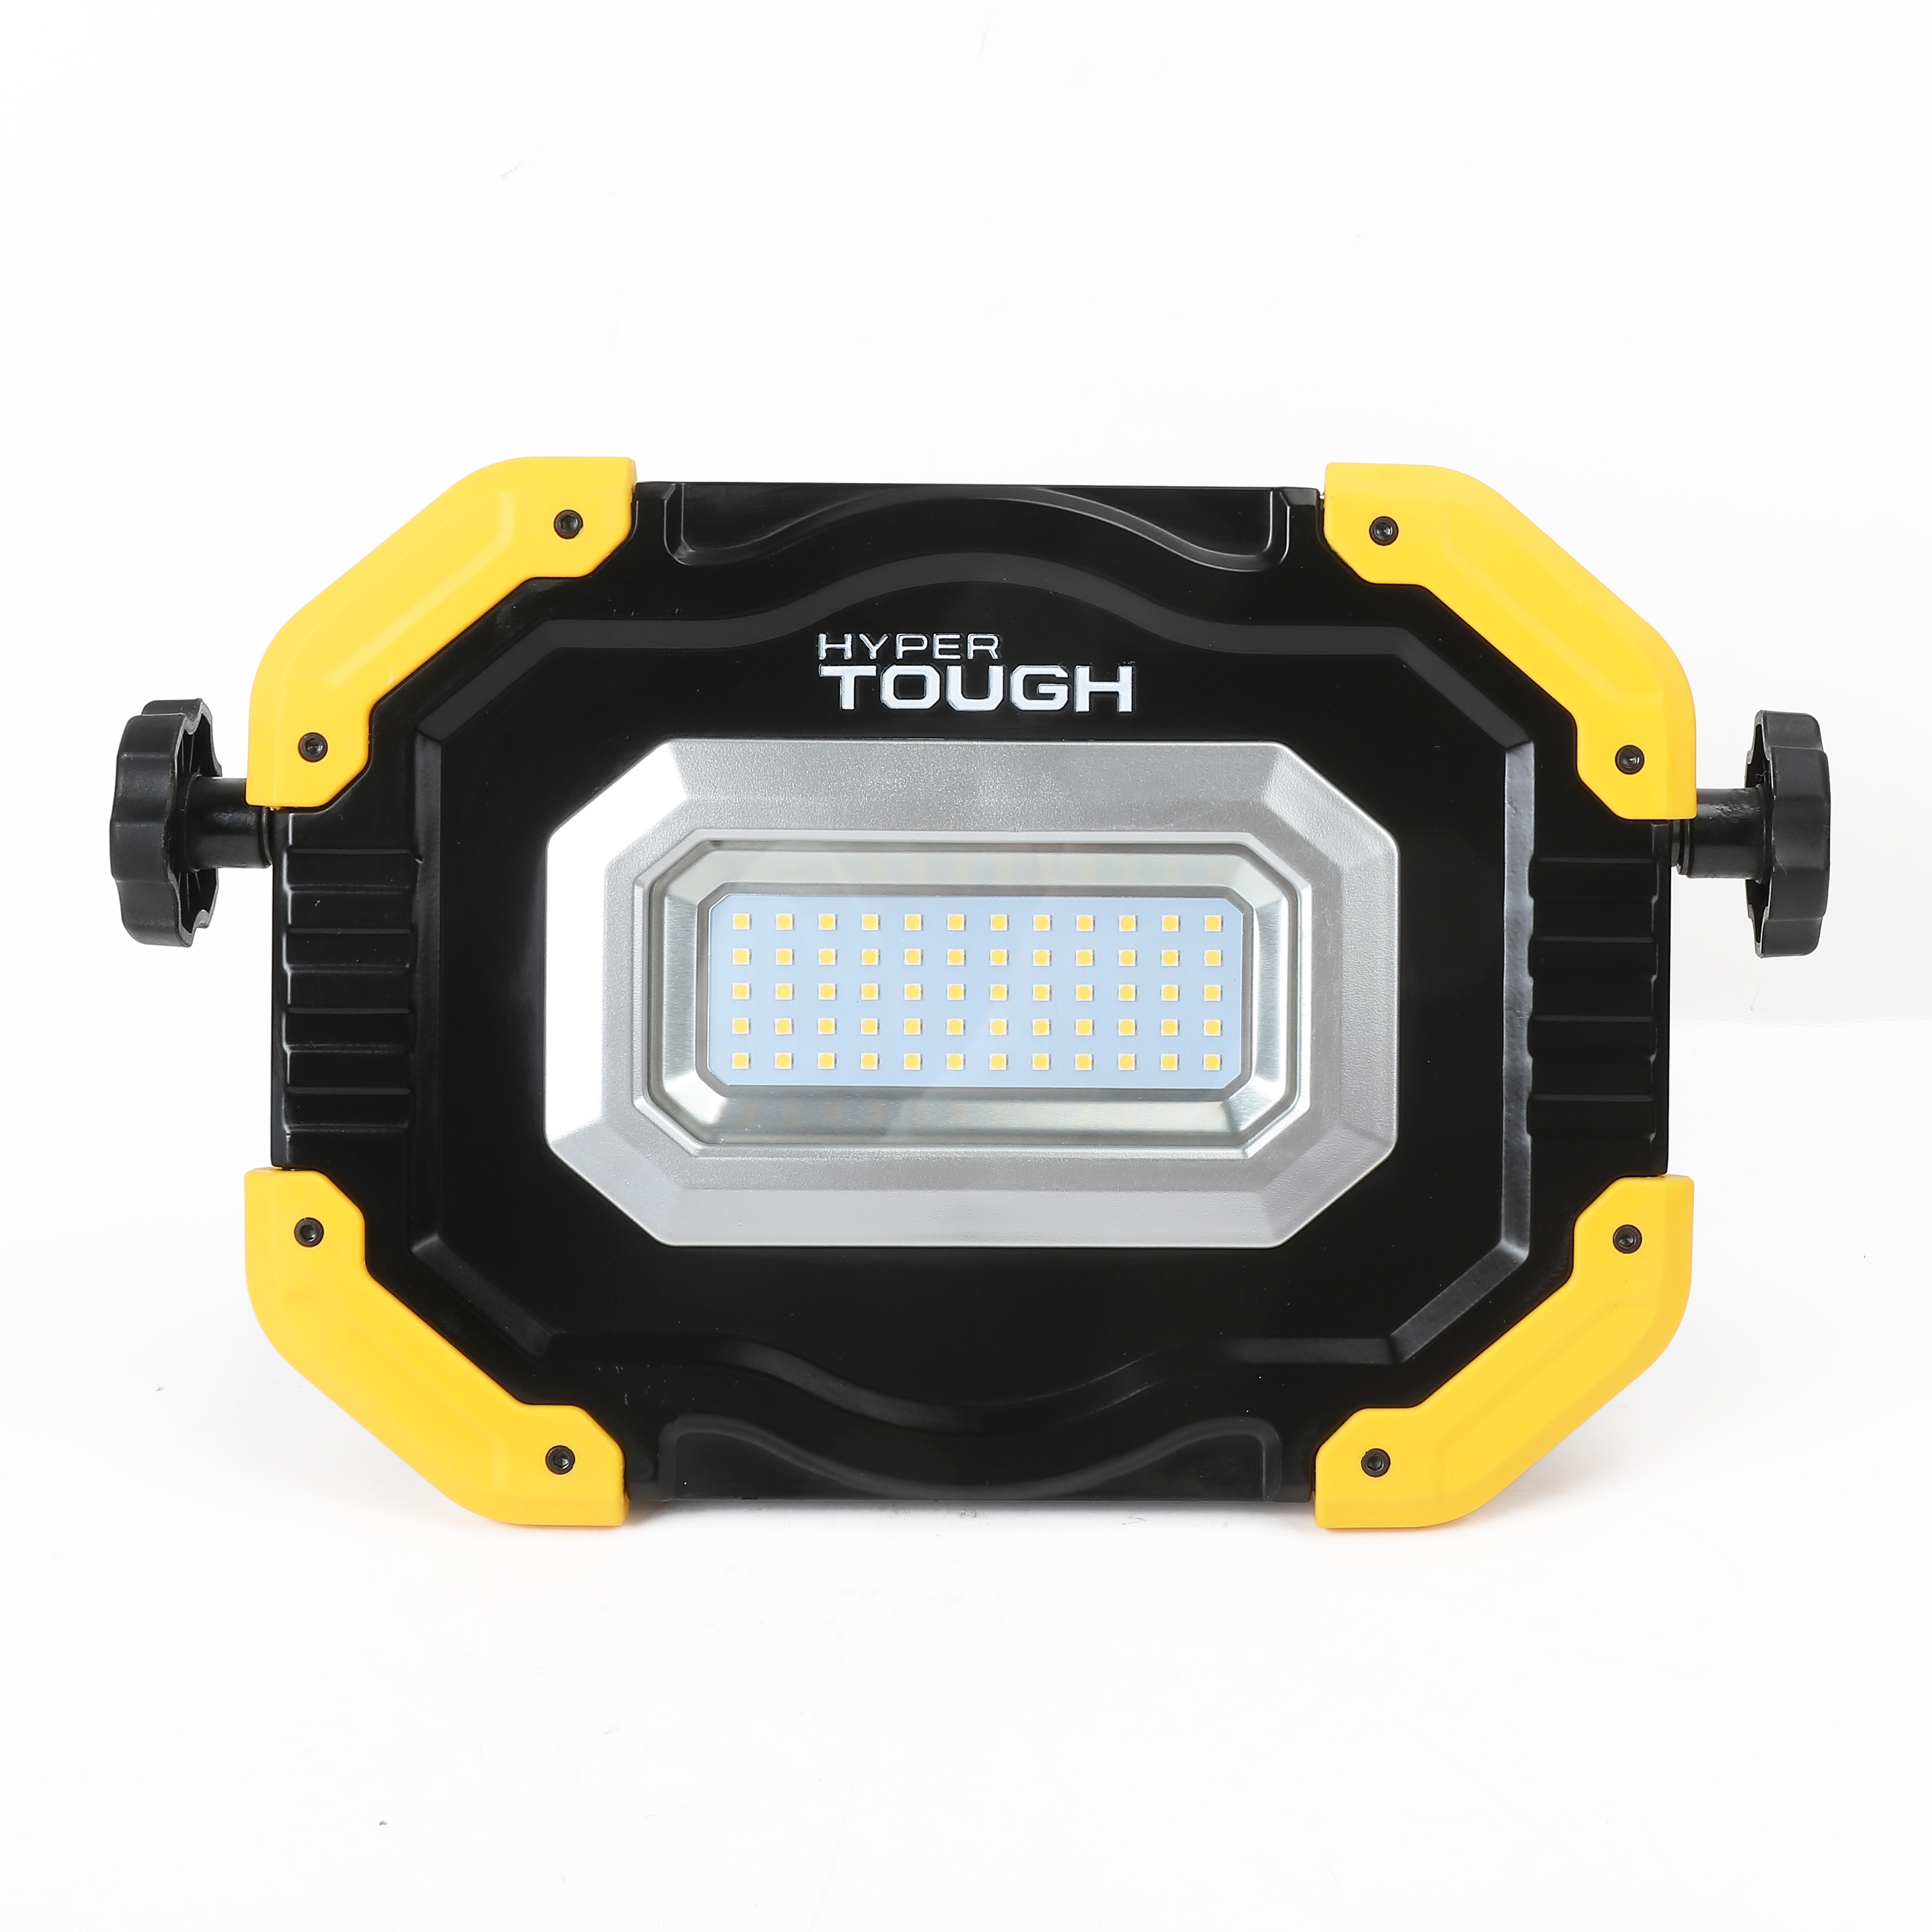 Hyper Tough 5000 Lumen Rechargeable LED Work Light,Yellow Black,Model 7047 